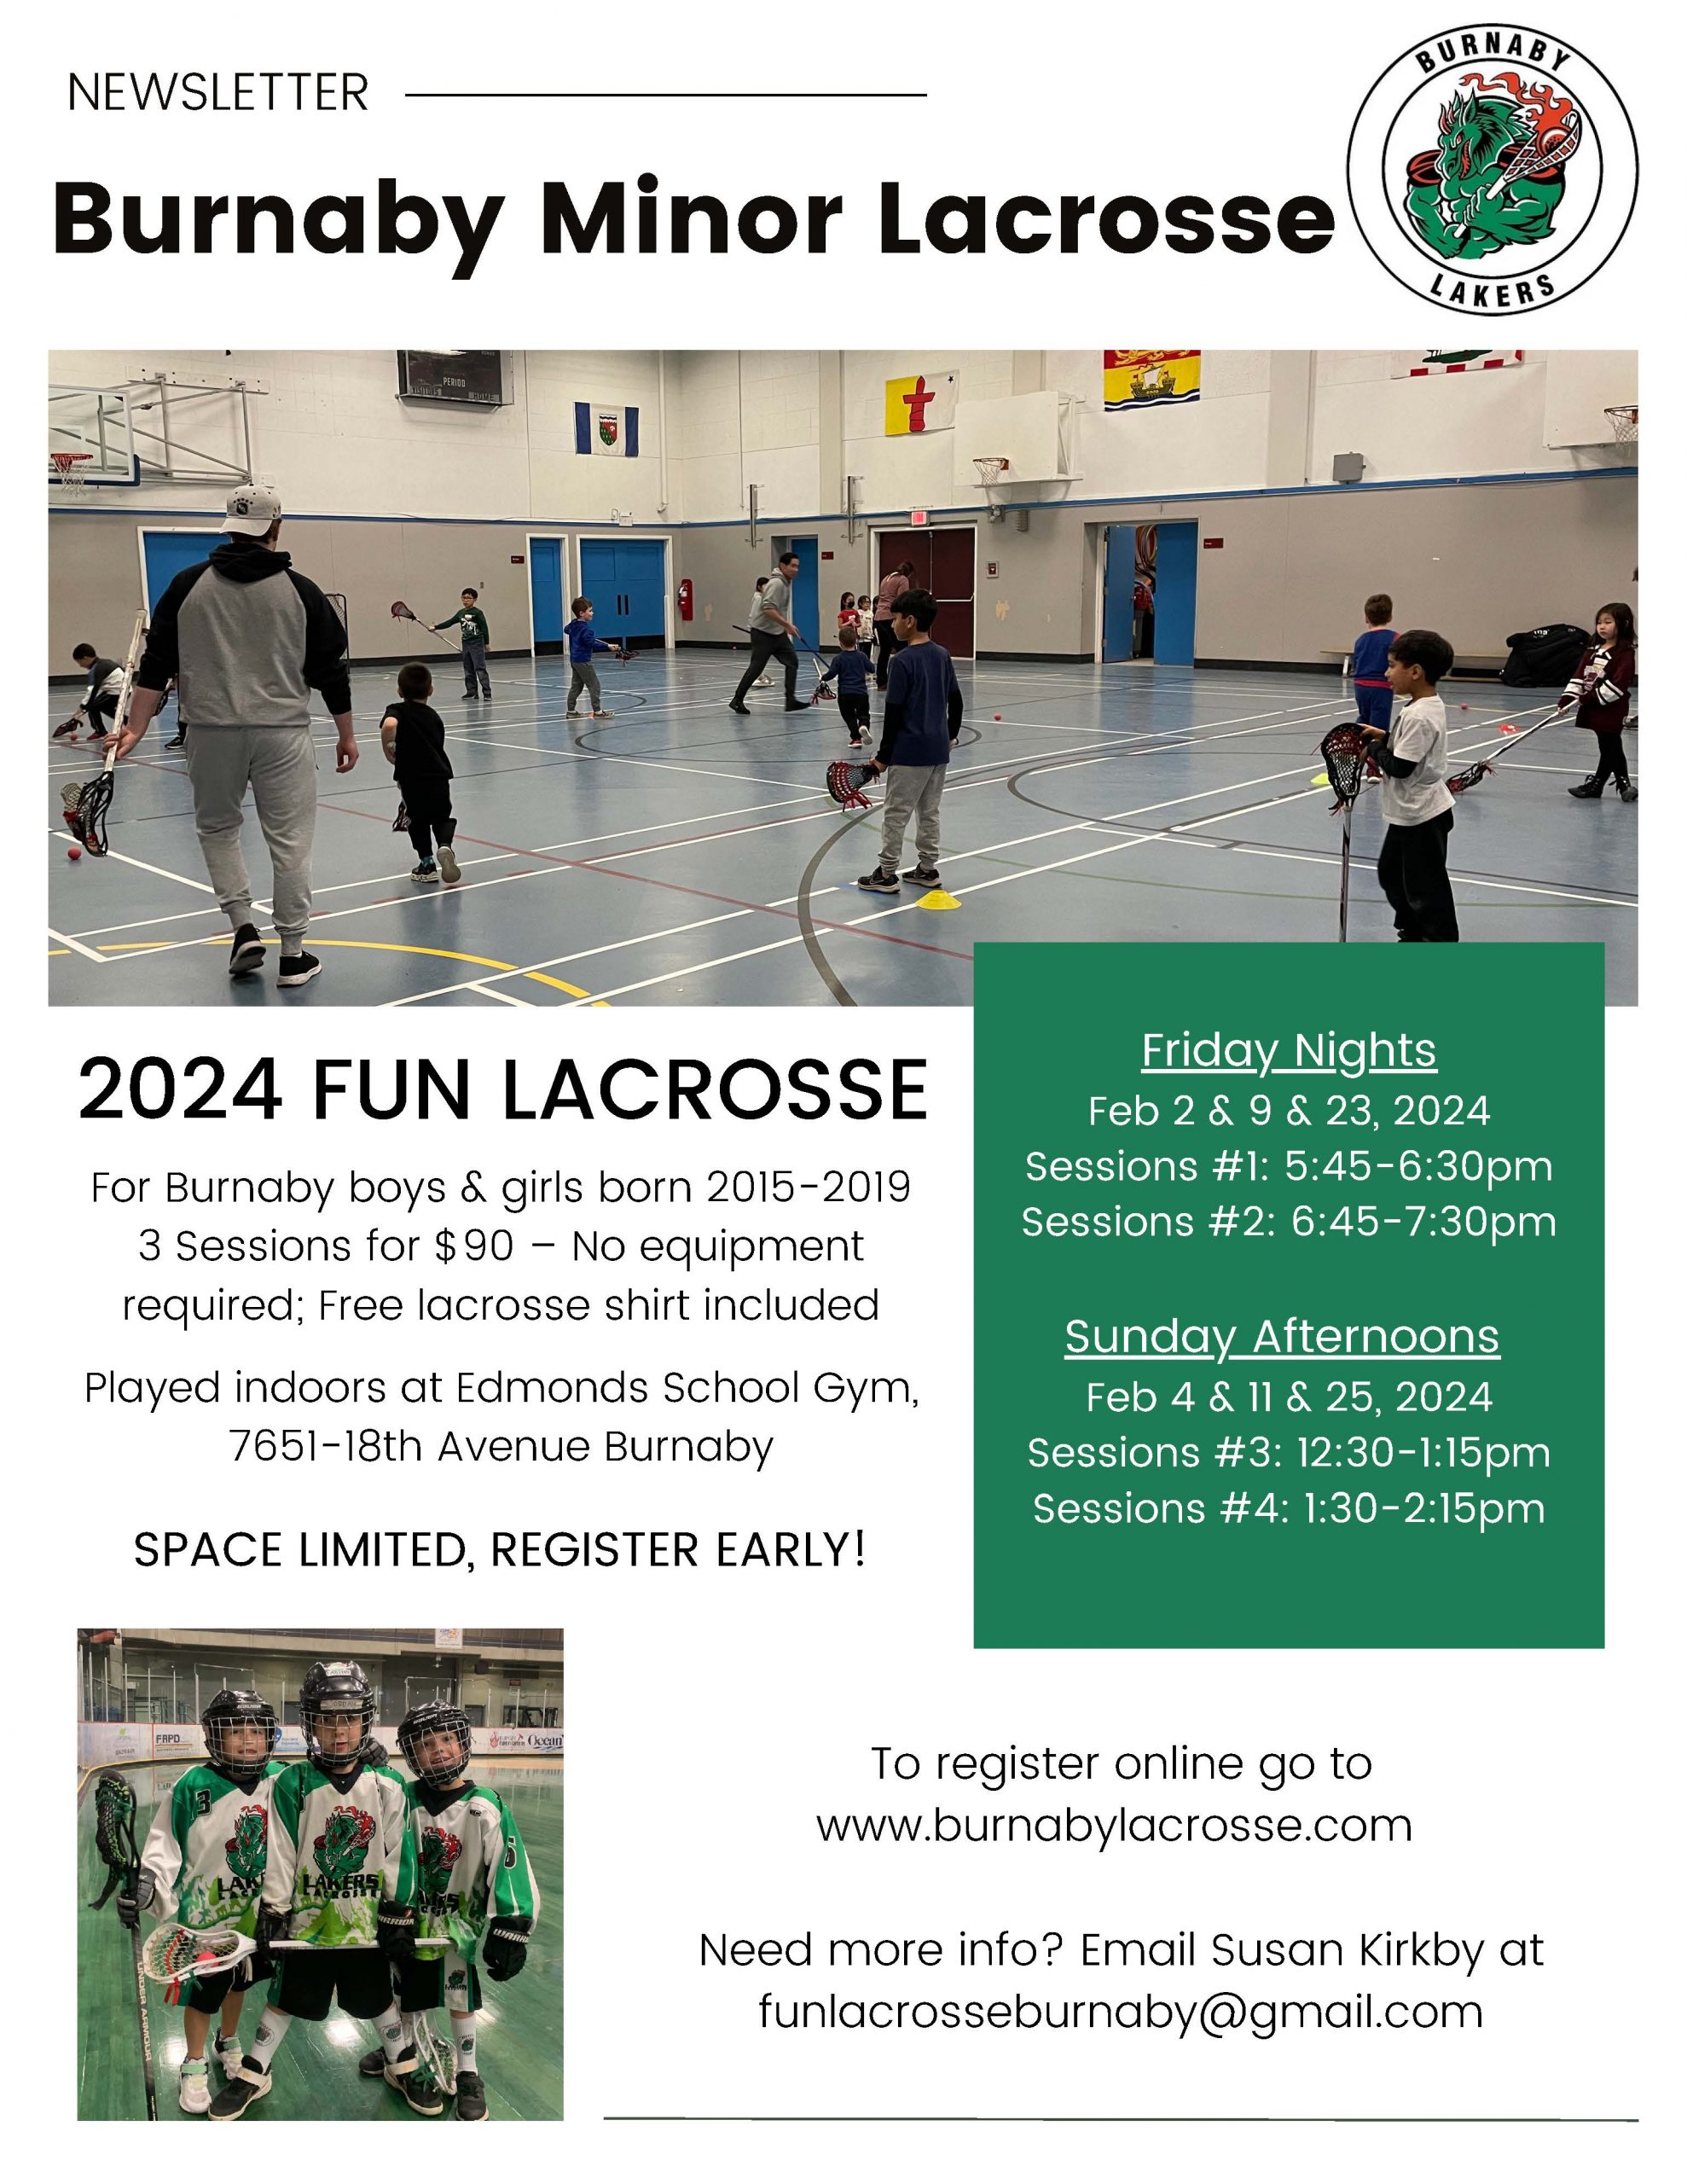 Fun Lacrosse Poster | Stride Avenue Community School